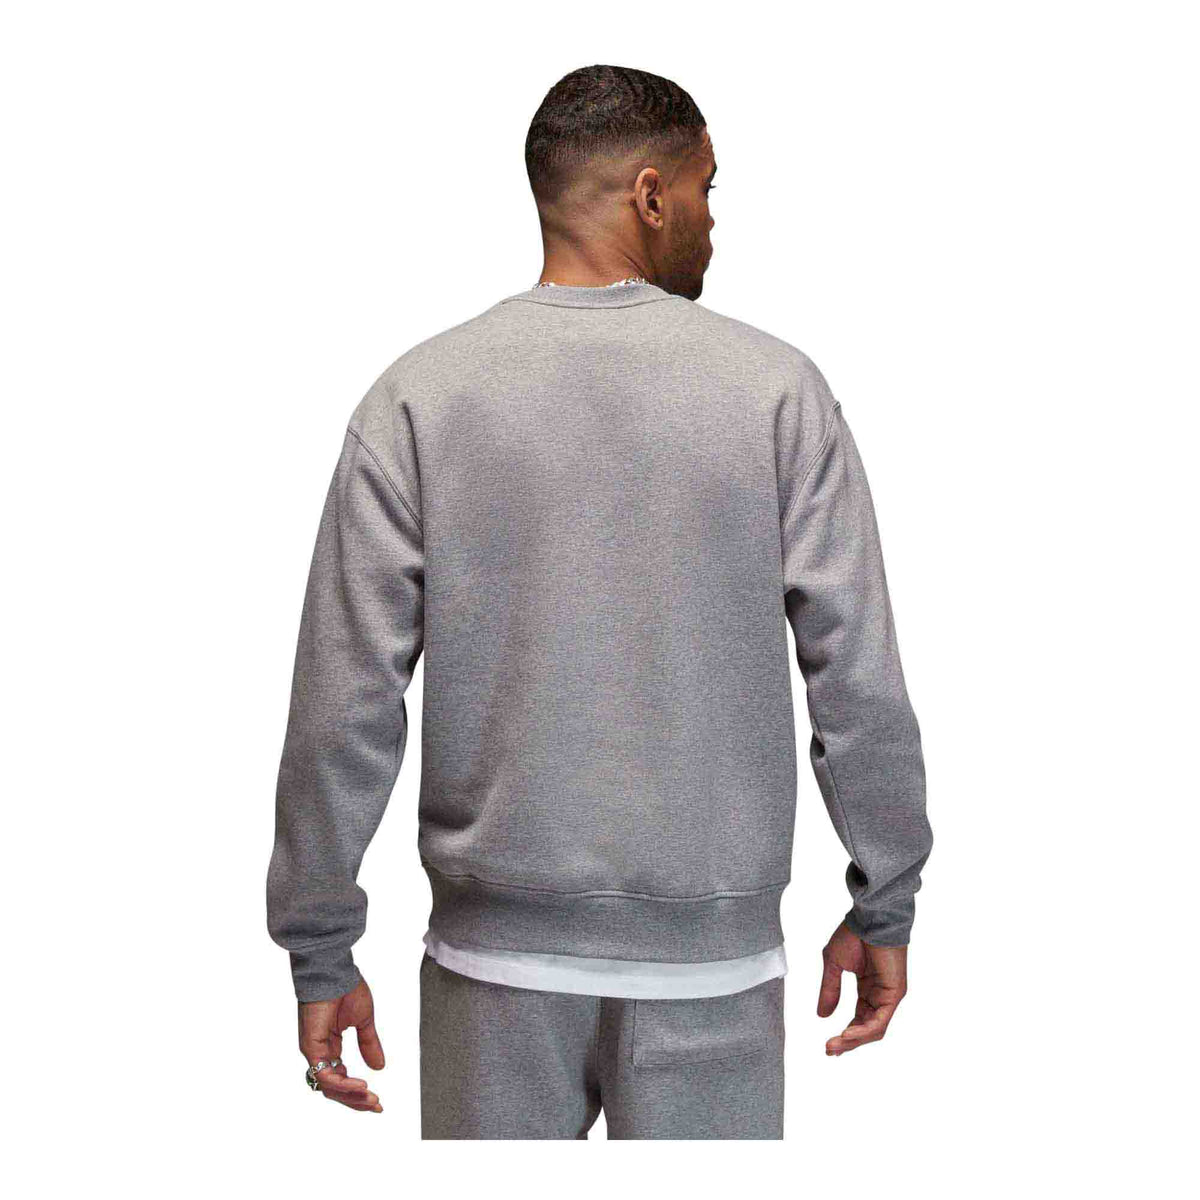 Jordan 1 Retro High OG Prototype Men's Crewneck Sweatshirt